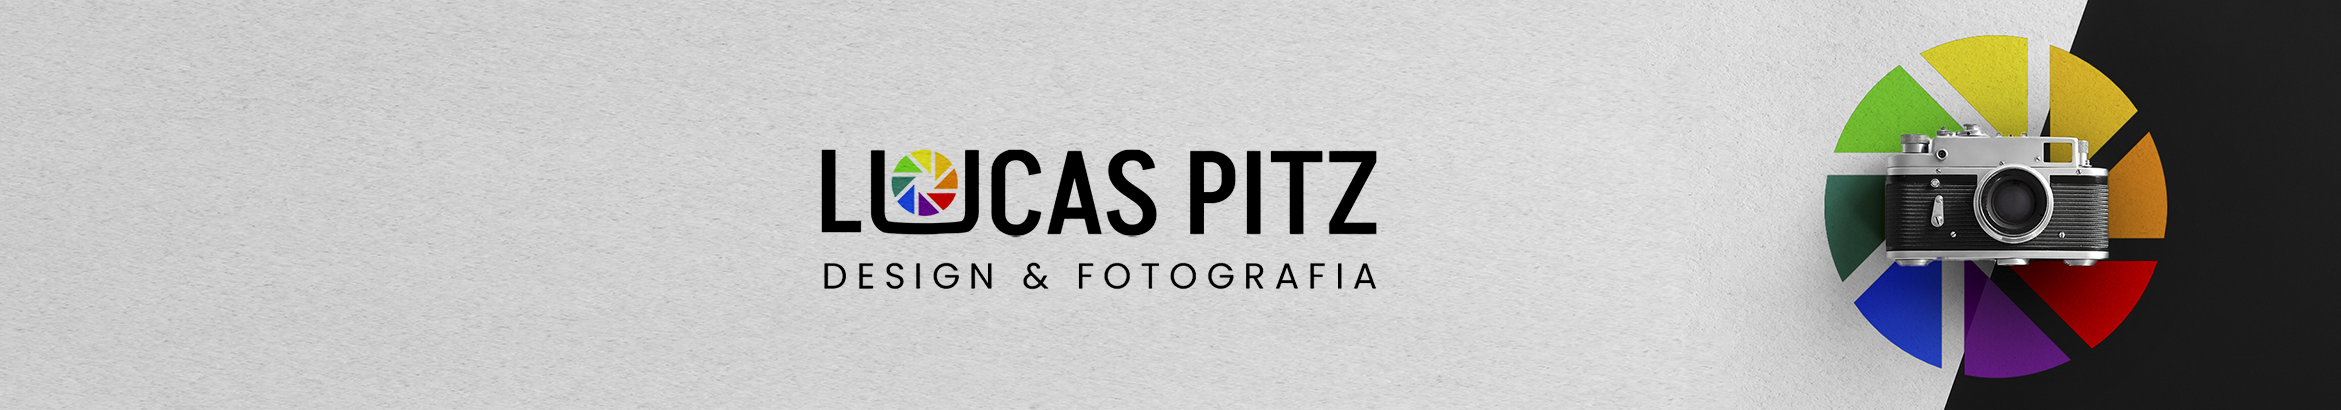 Lucas Pitz Designs profilbanner